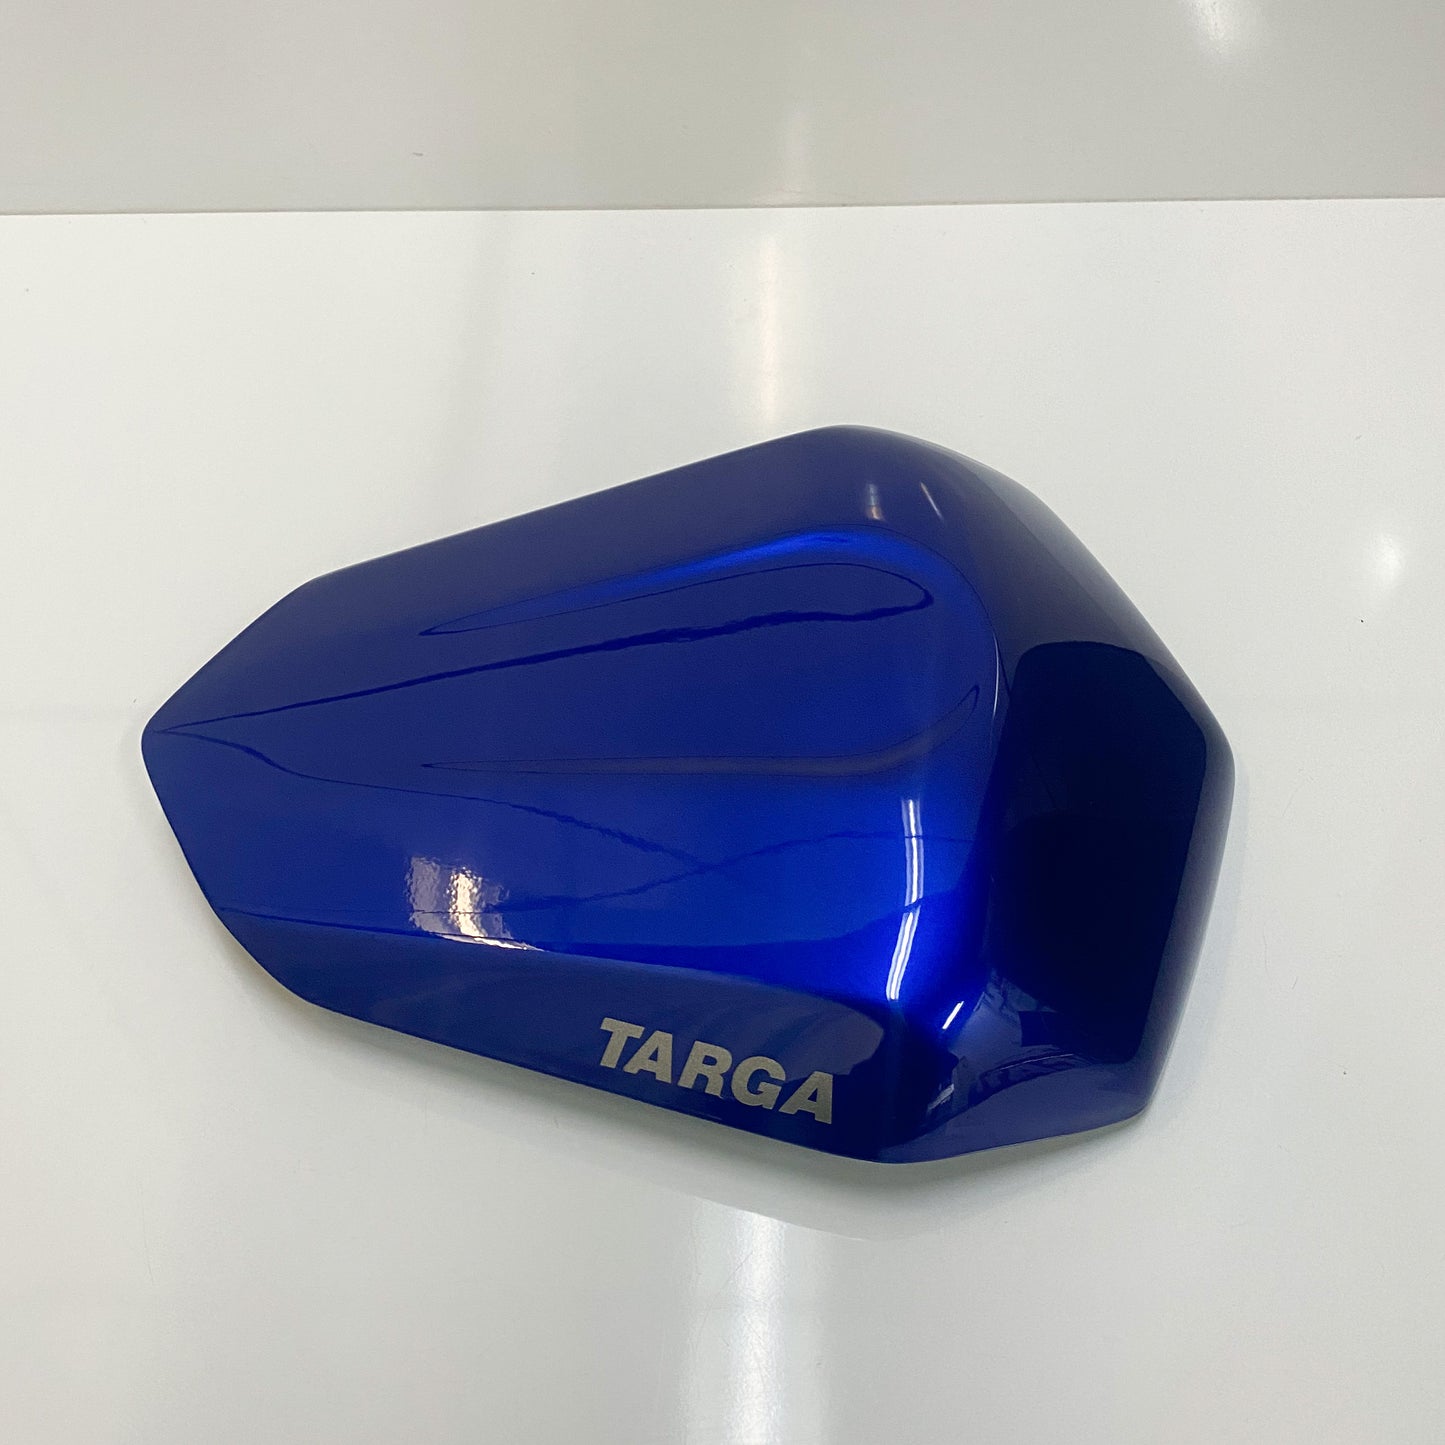 Targa Seat Cowl Yamaha R6 '06 Metallic Blue  25-231 NOS